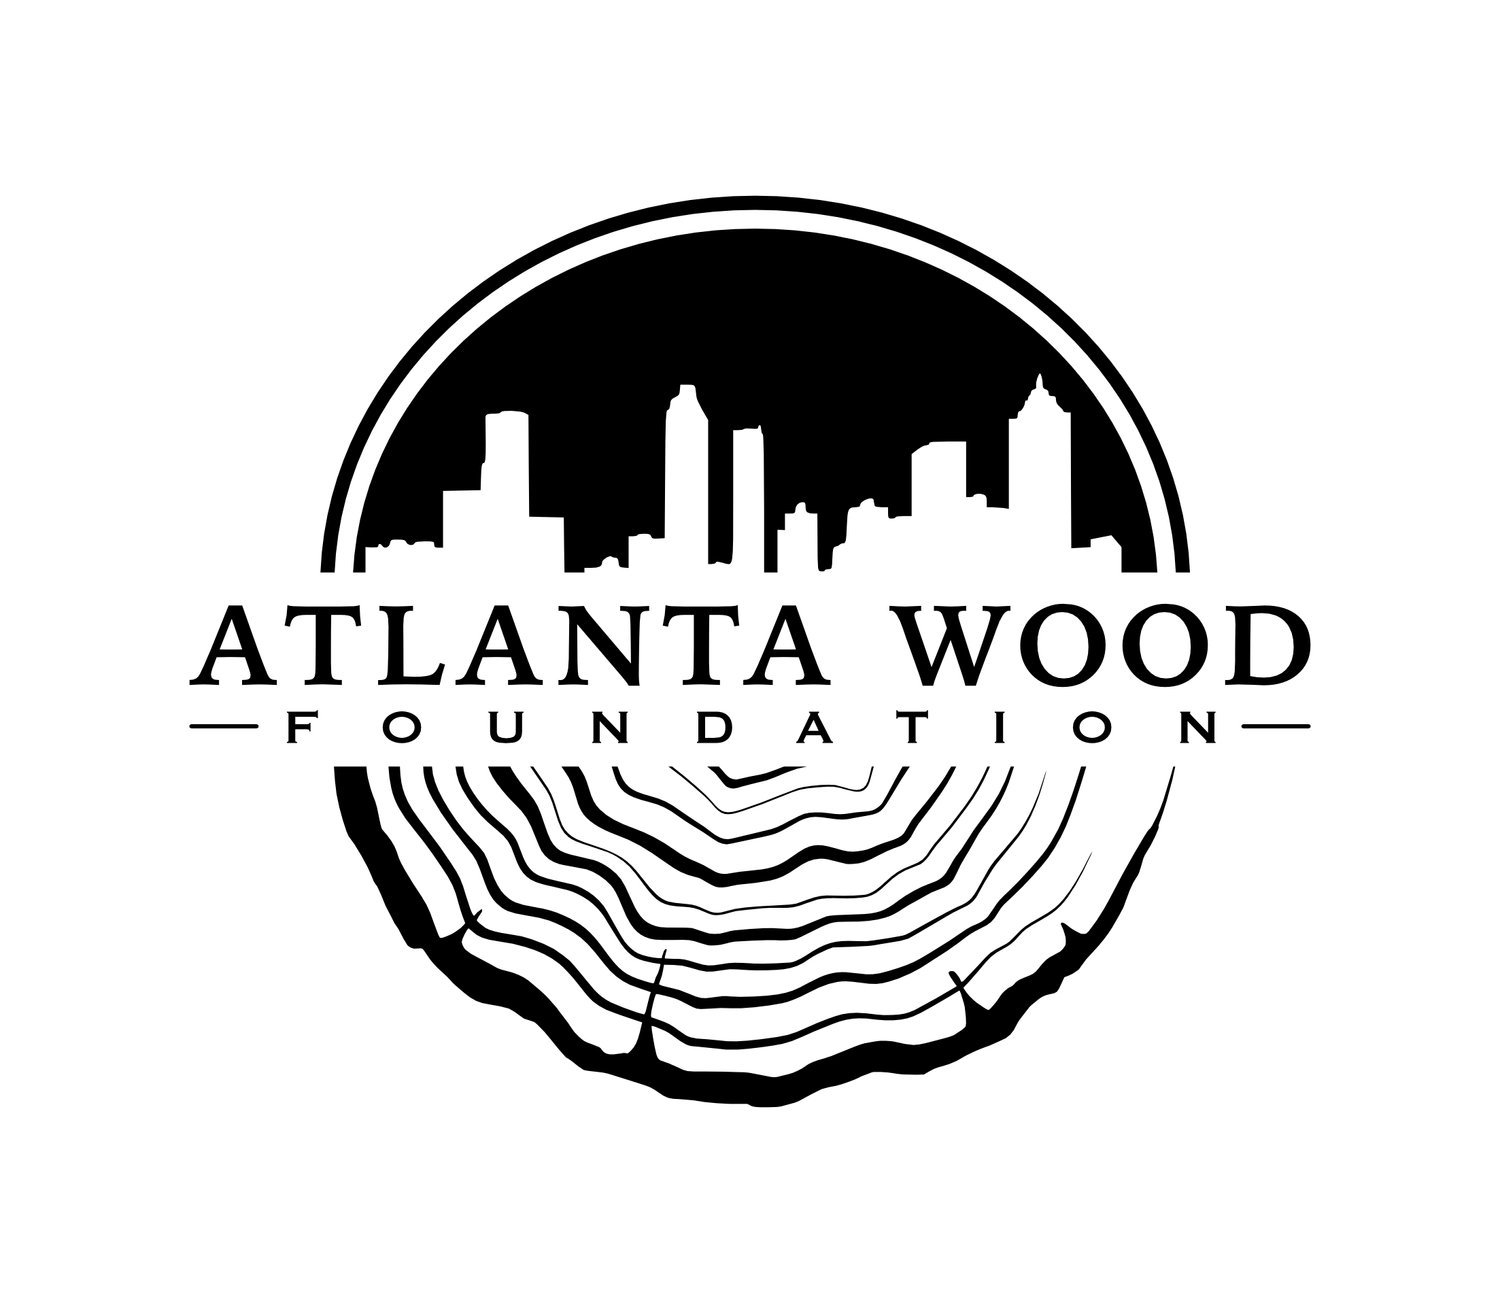 www.atlantawoodfoundation.org